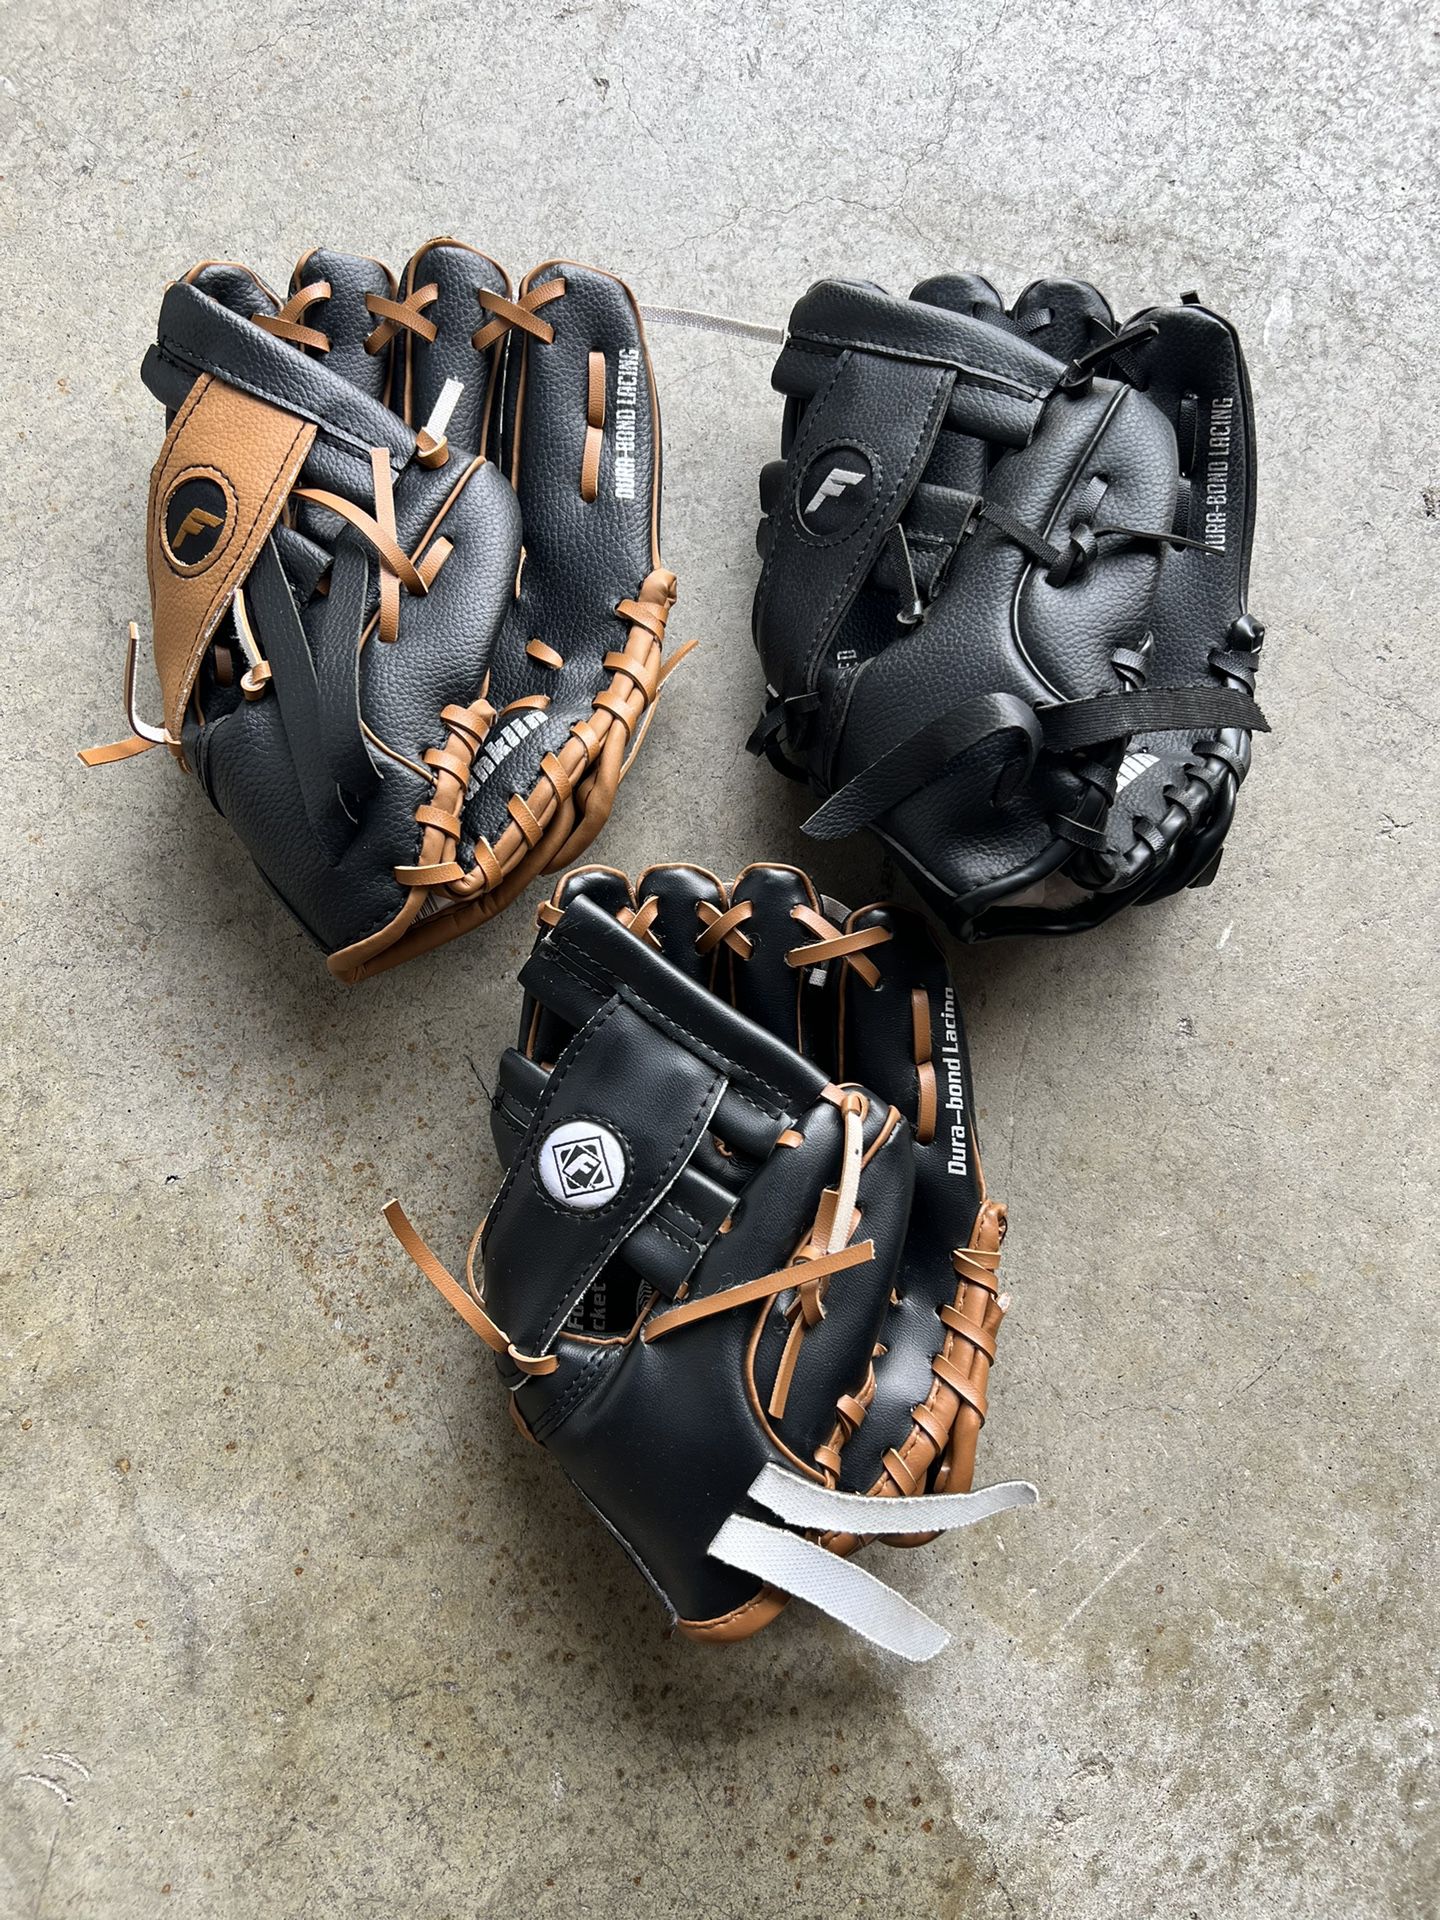 3 Tee-Ball Baseball Gloves 8 1/2 Inches All 3